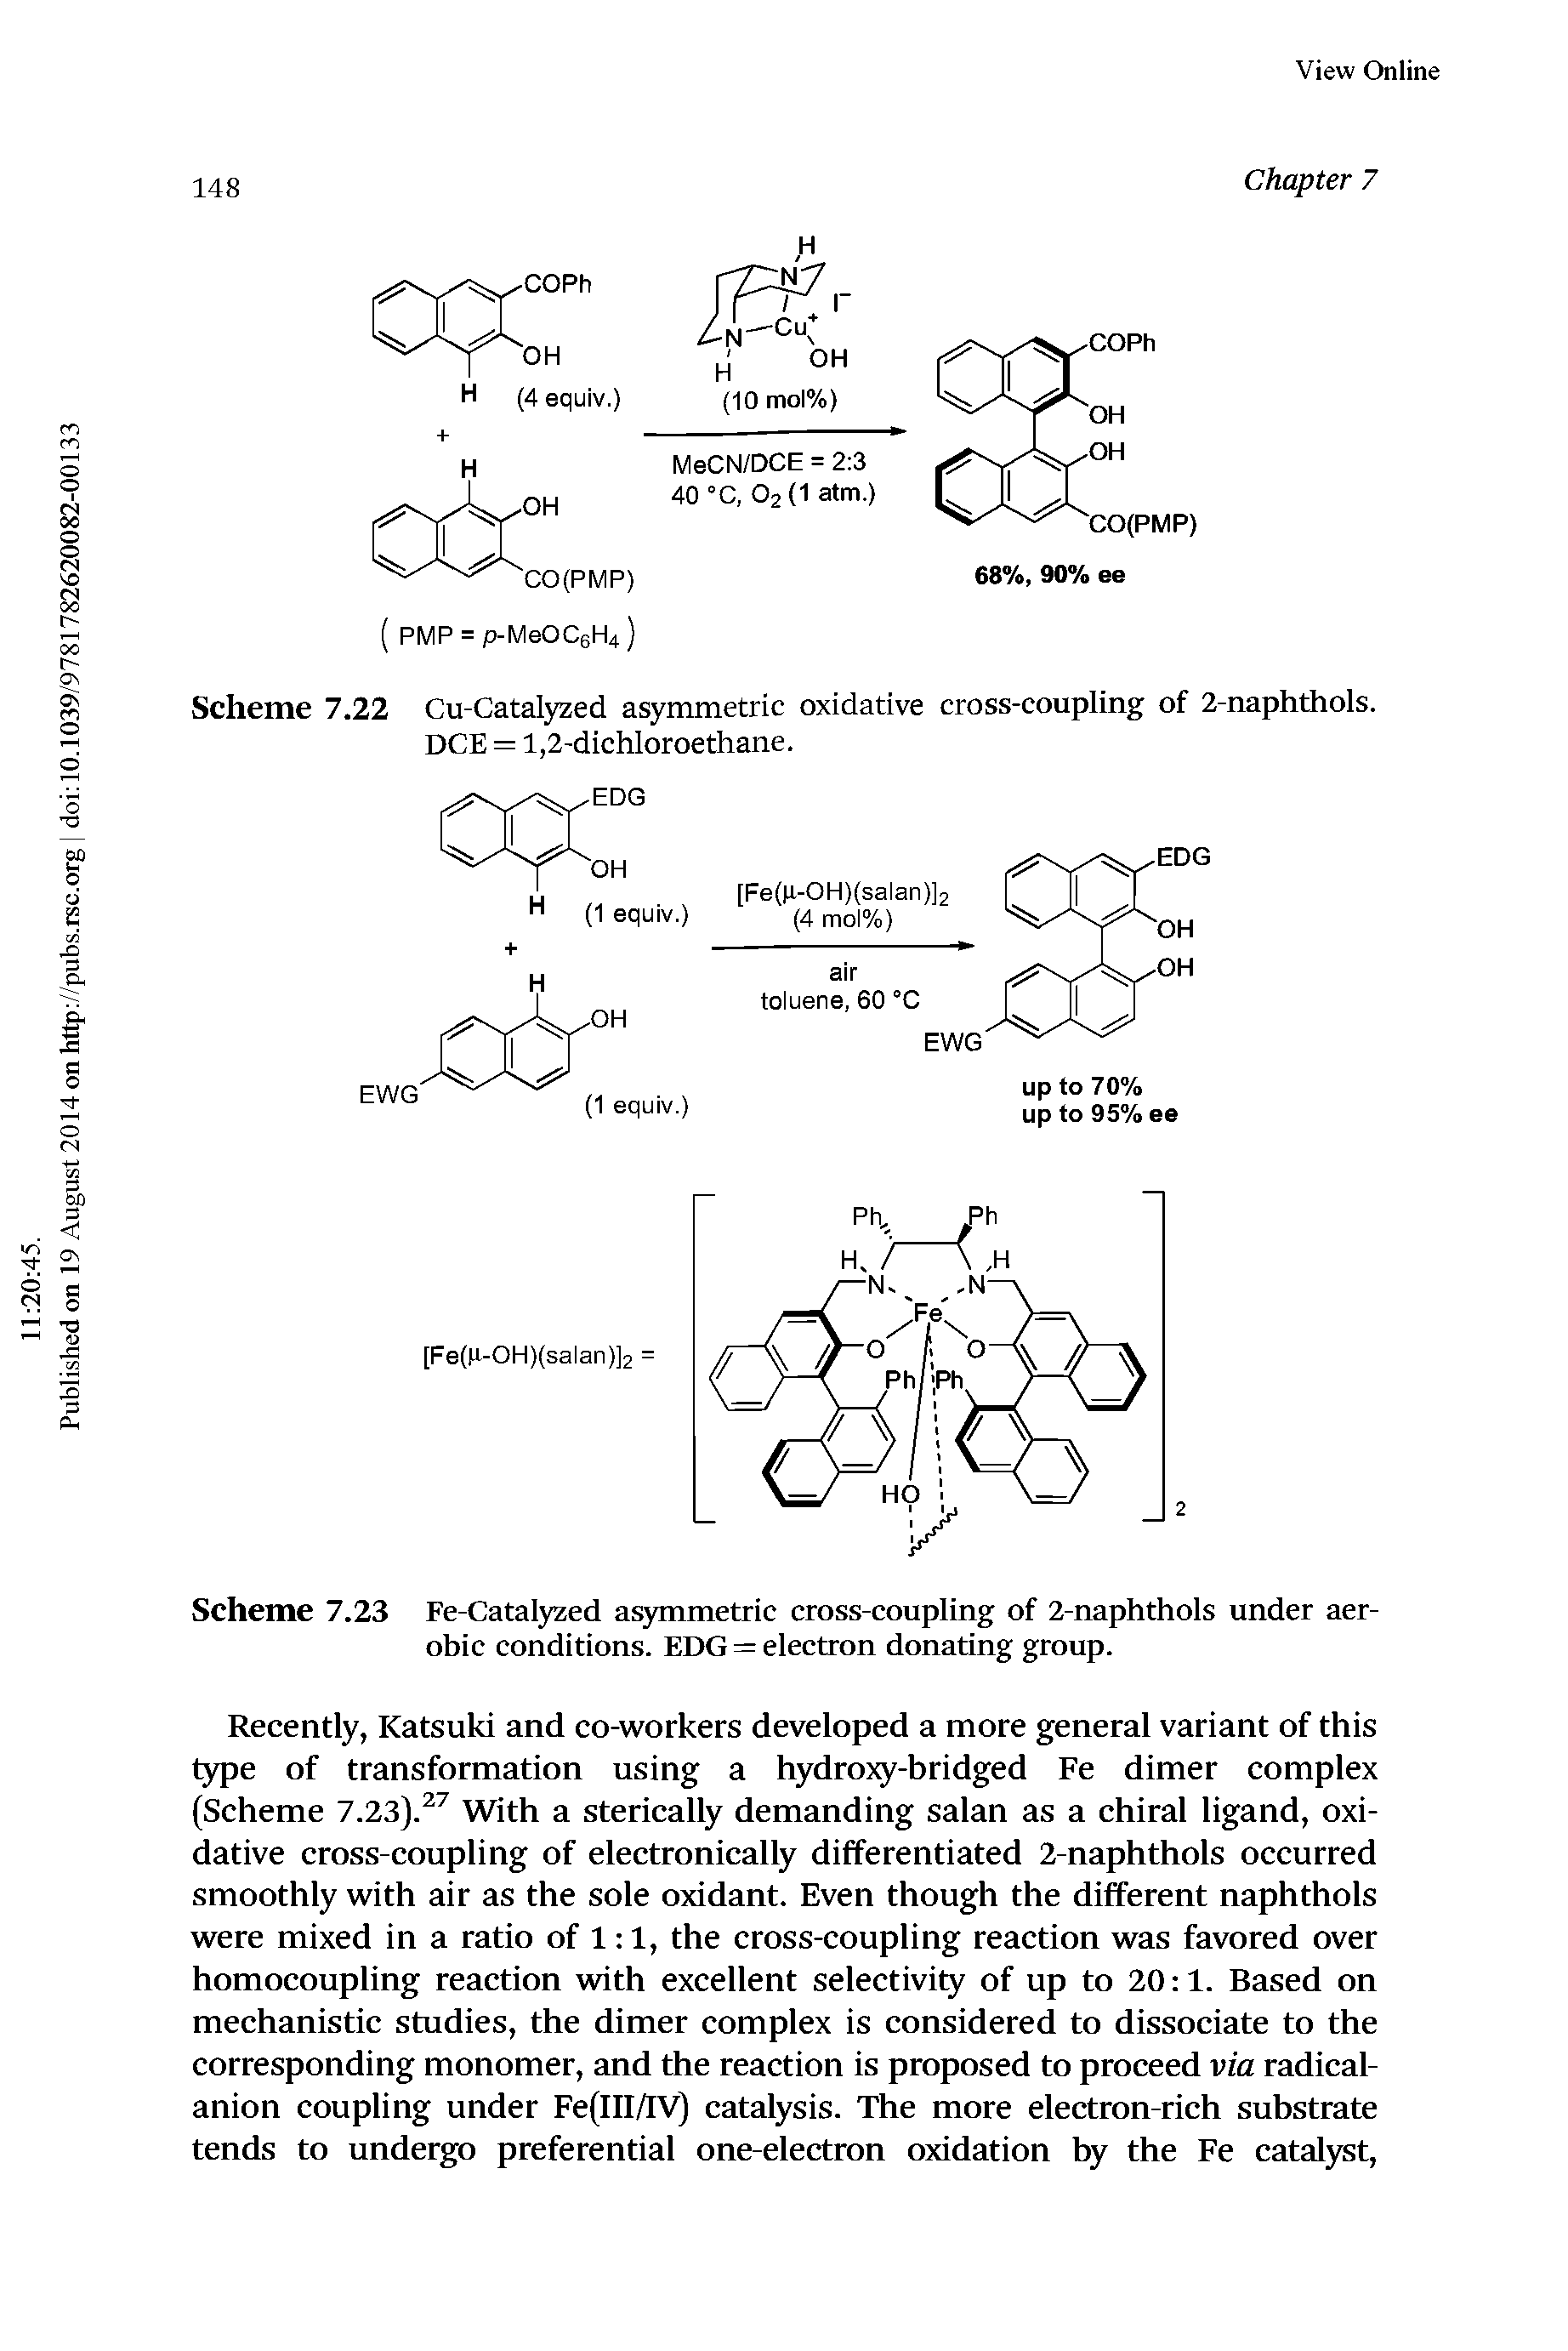 Scheme 7.22 Cu-Catalyzed asymmetric oxidative cross-coupling of 2-naphthols. DCE = 1,2-dichloroethane.